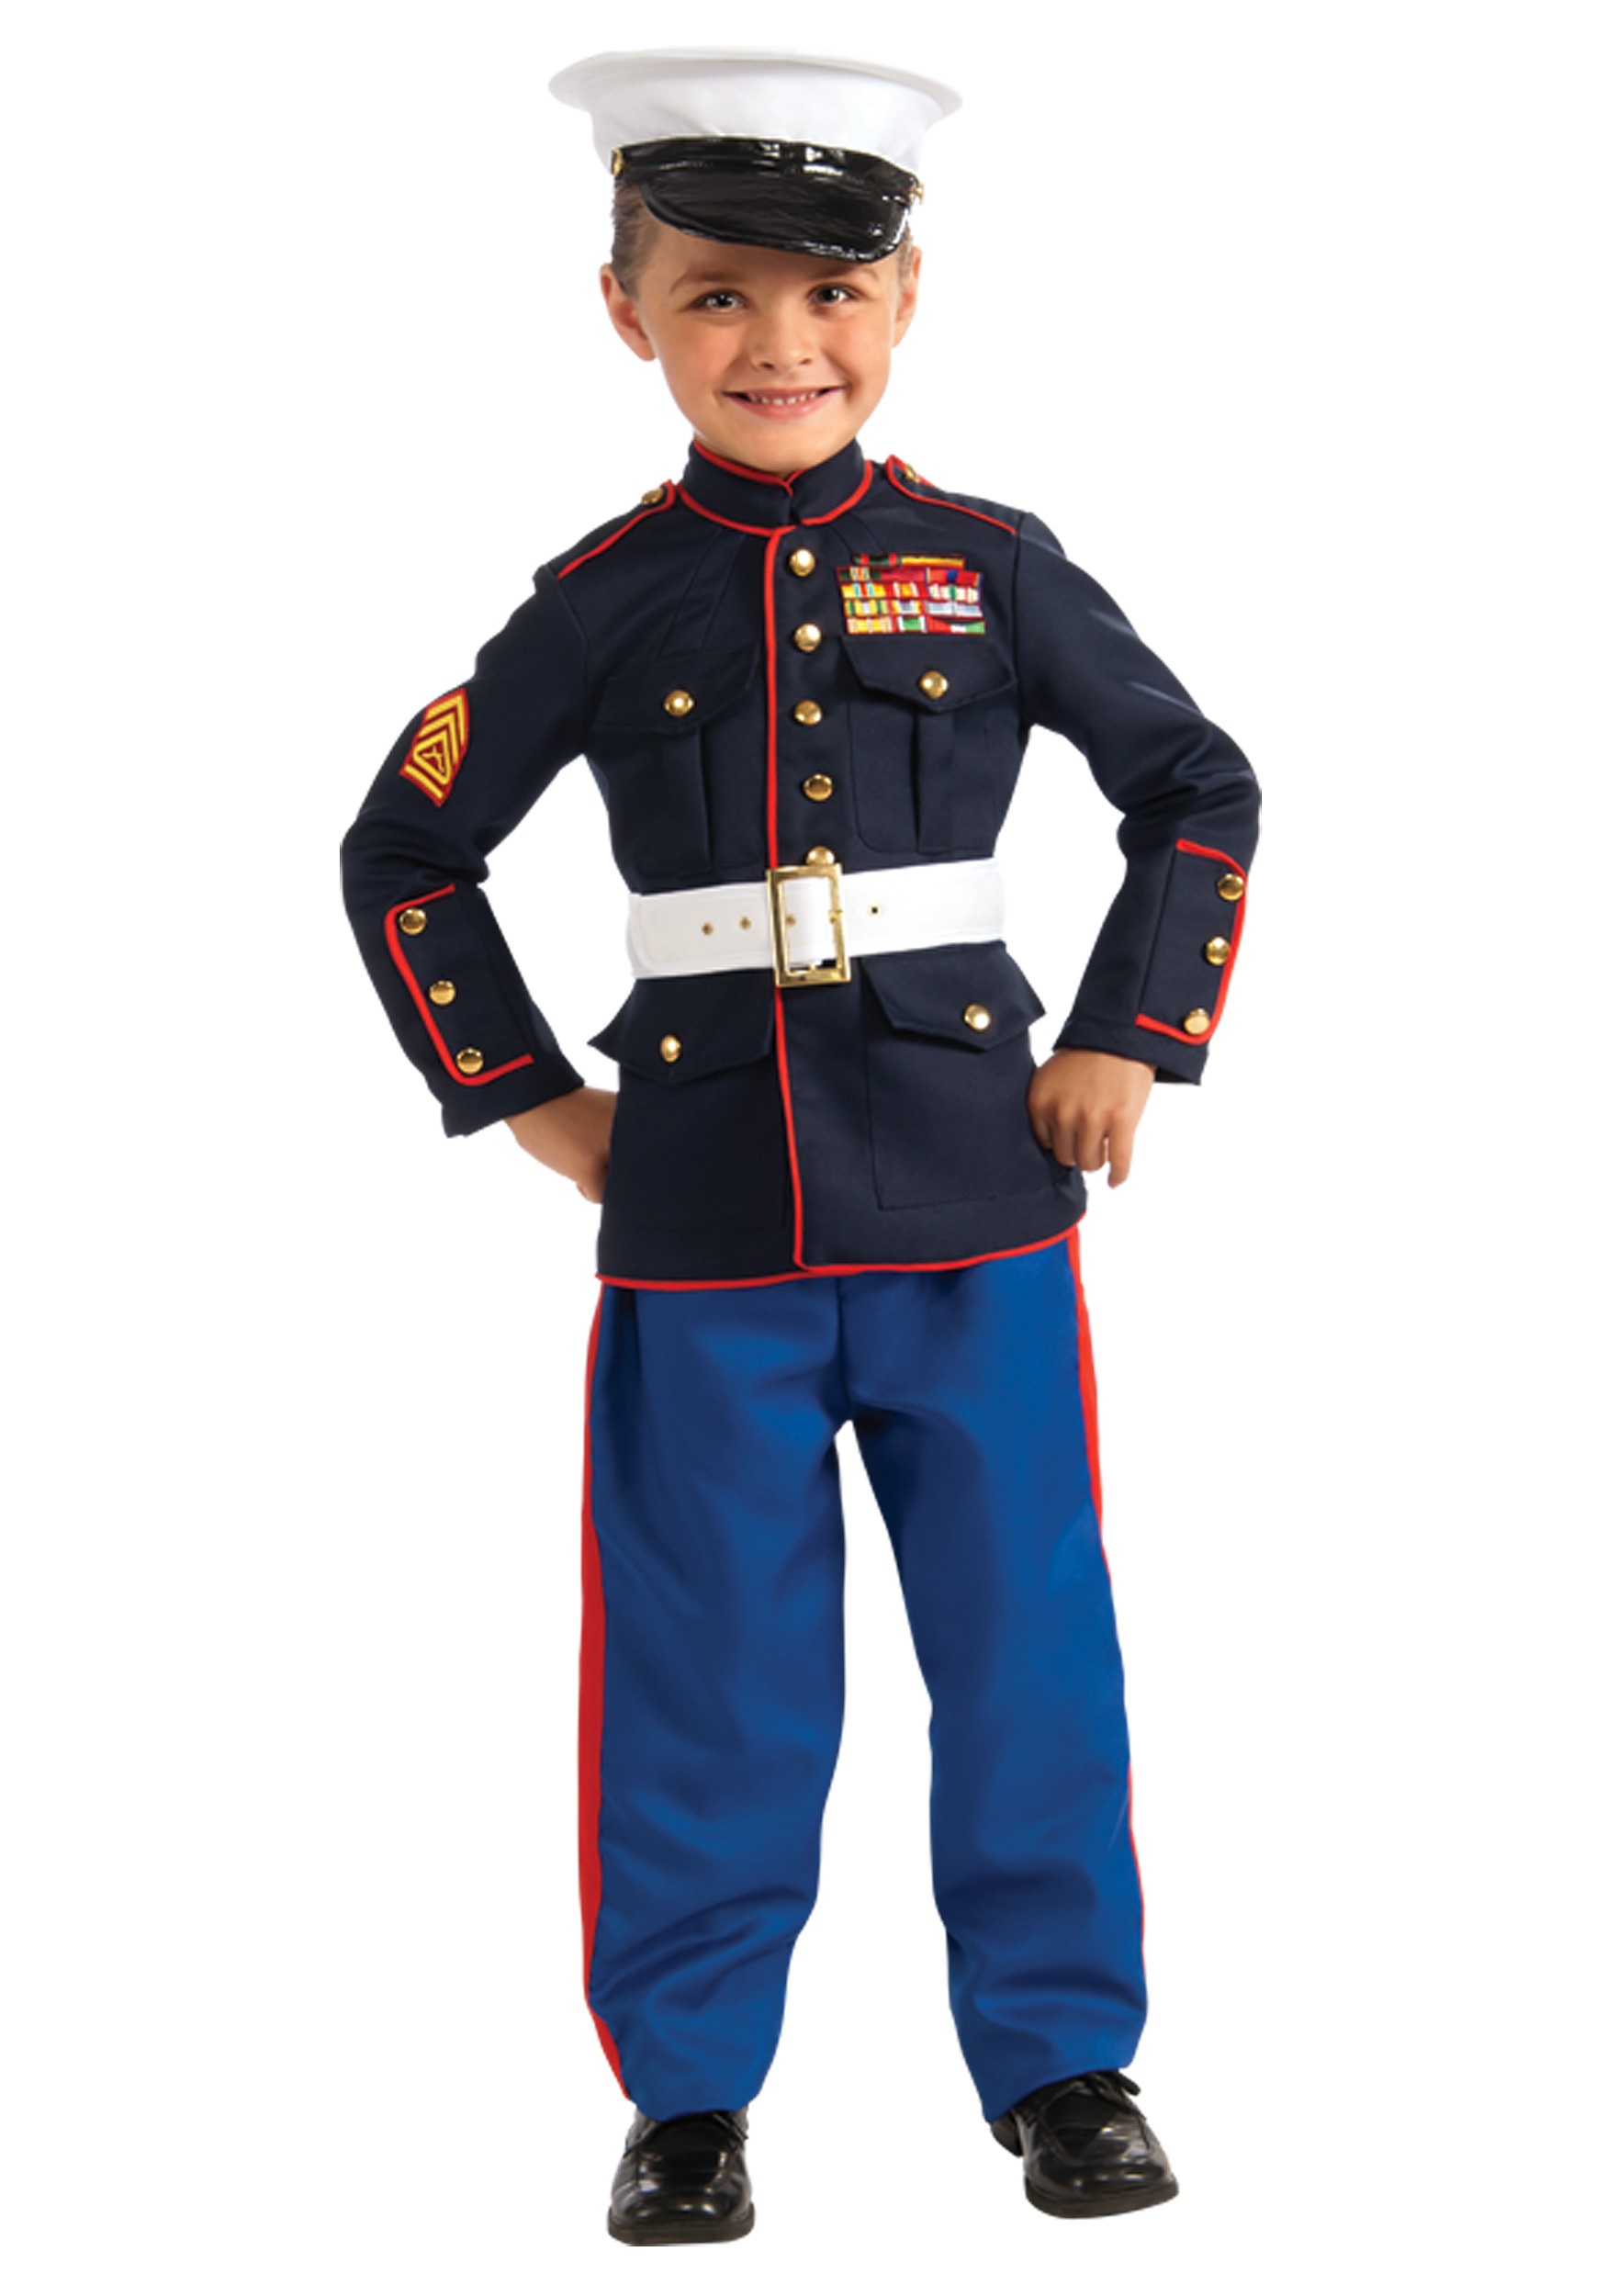 Marine Uniform Images 47